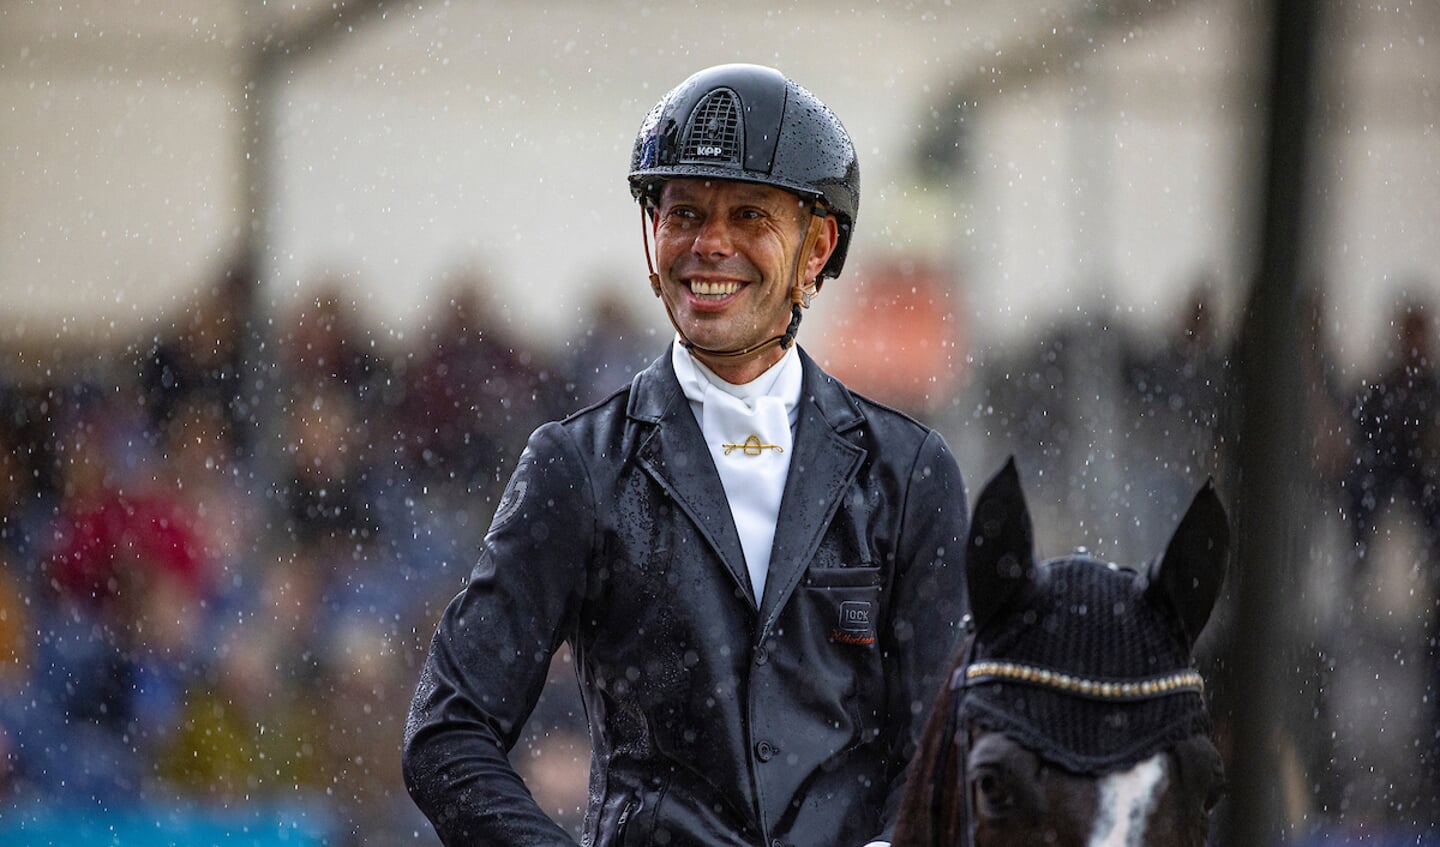 Hans Peter Minderhoud (NED) - My Toto
Longines FEI/WBFSH World Breeding Dressage Championships for Young Horses 2023
© DigiShots